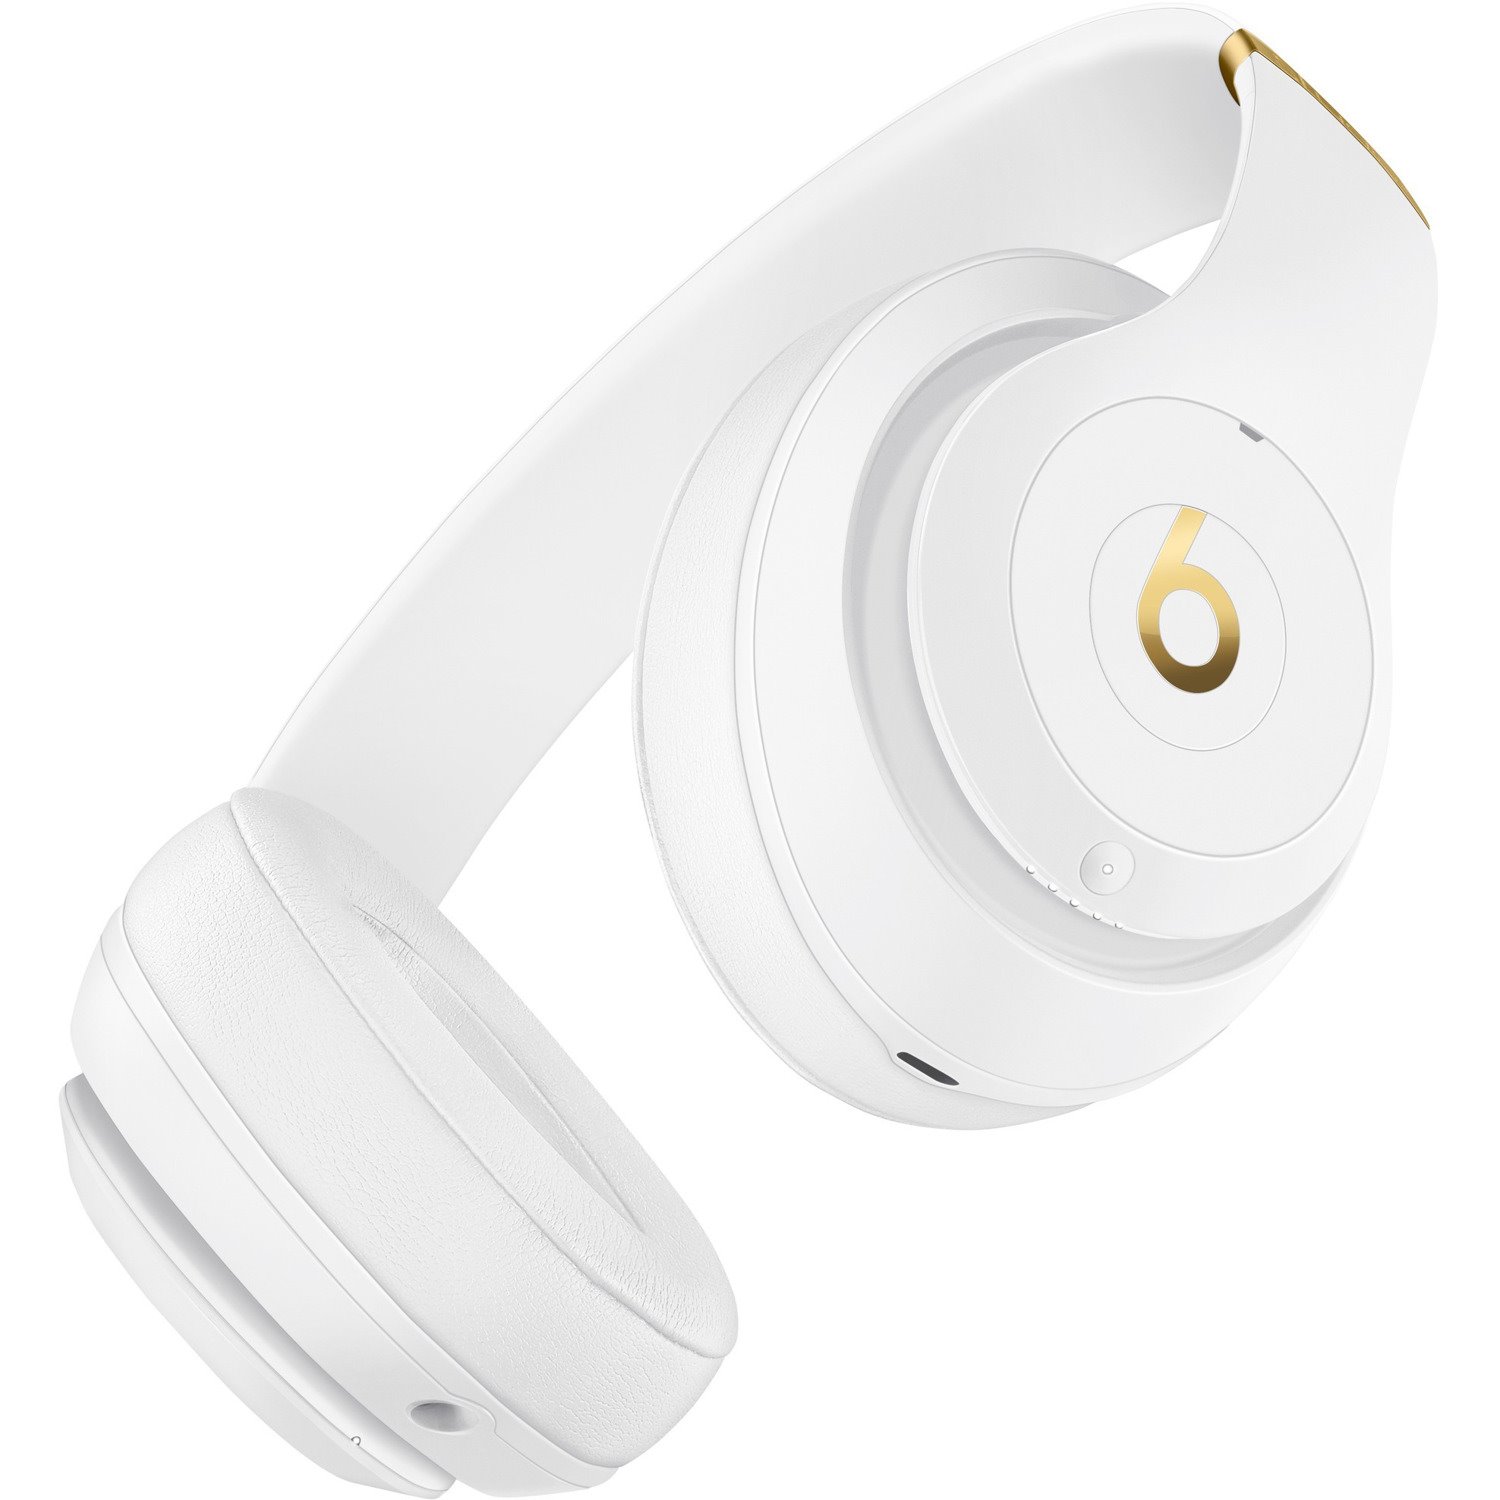 Beats by Dr. Dre Studio3 Wireless Over-Ear Headphones - White